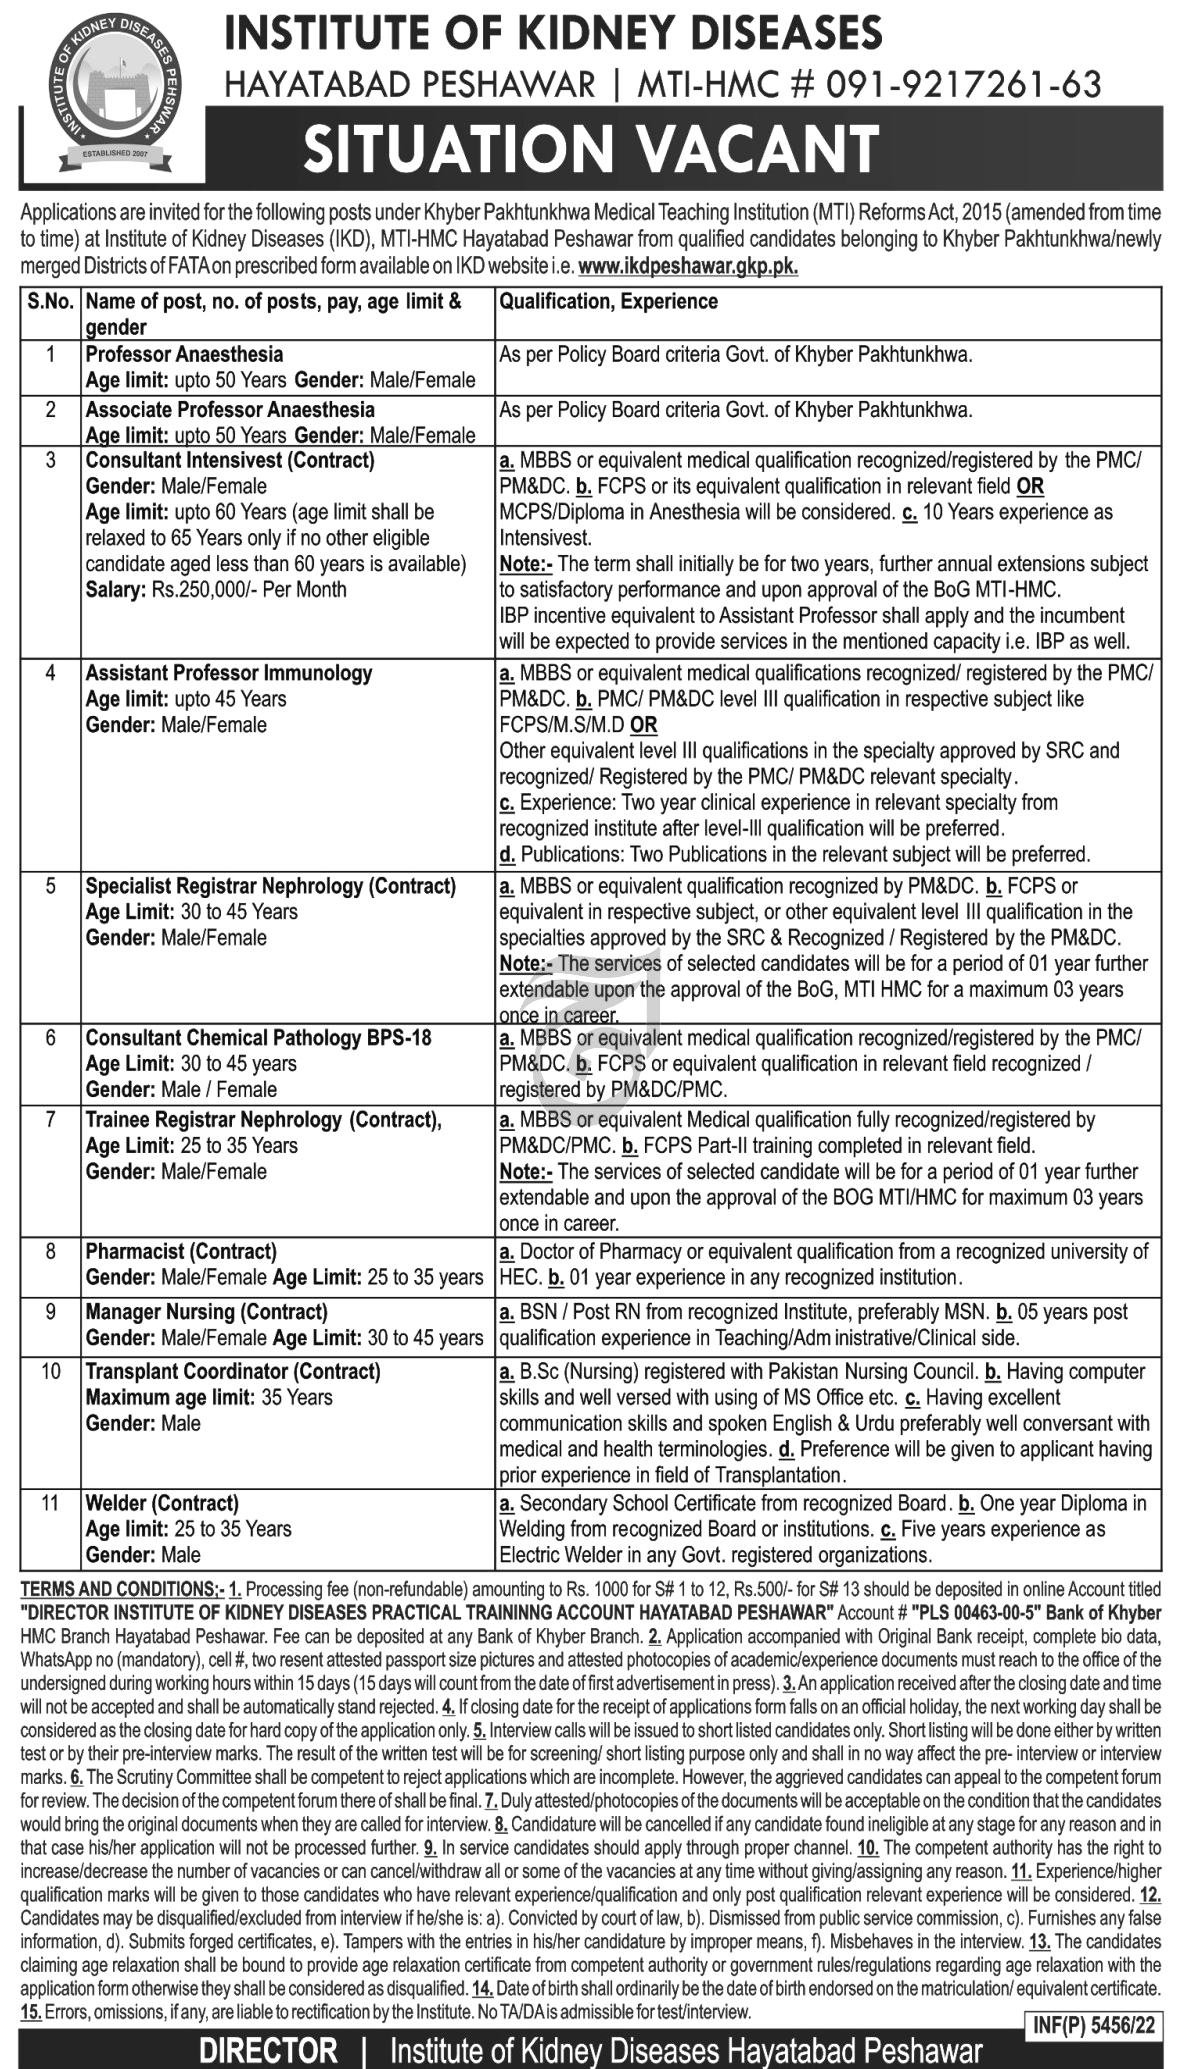 Institute of Kidney Diseases Peshawar Jobs